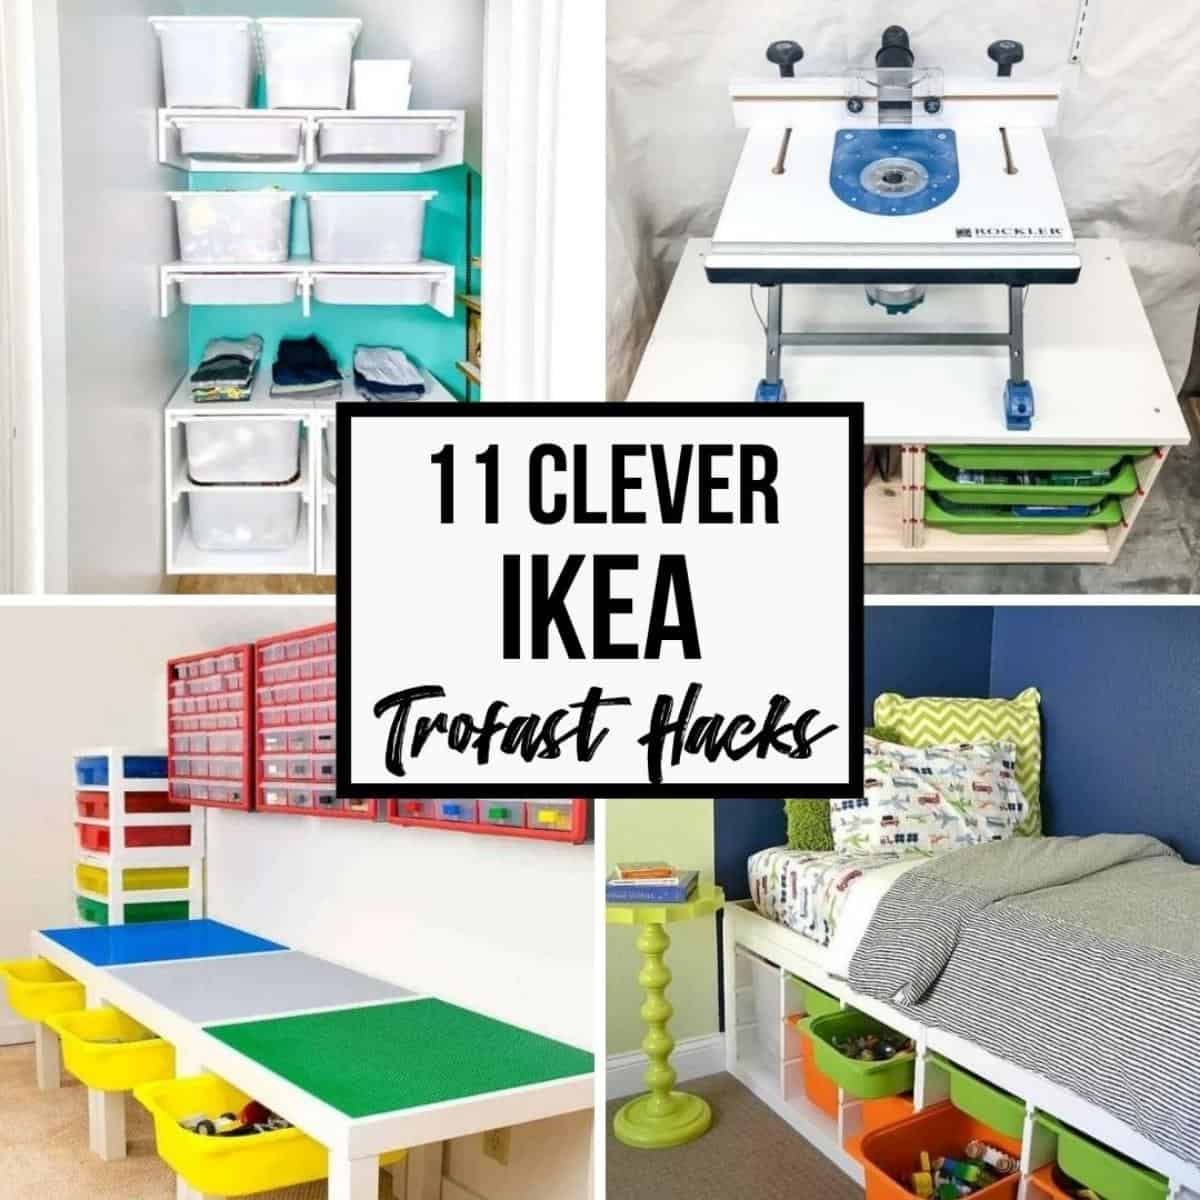 18 Crazy Good Ikea Trofast Hacks and Ideas  Ikea trofast, Ikea toy  storage, Home design diy